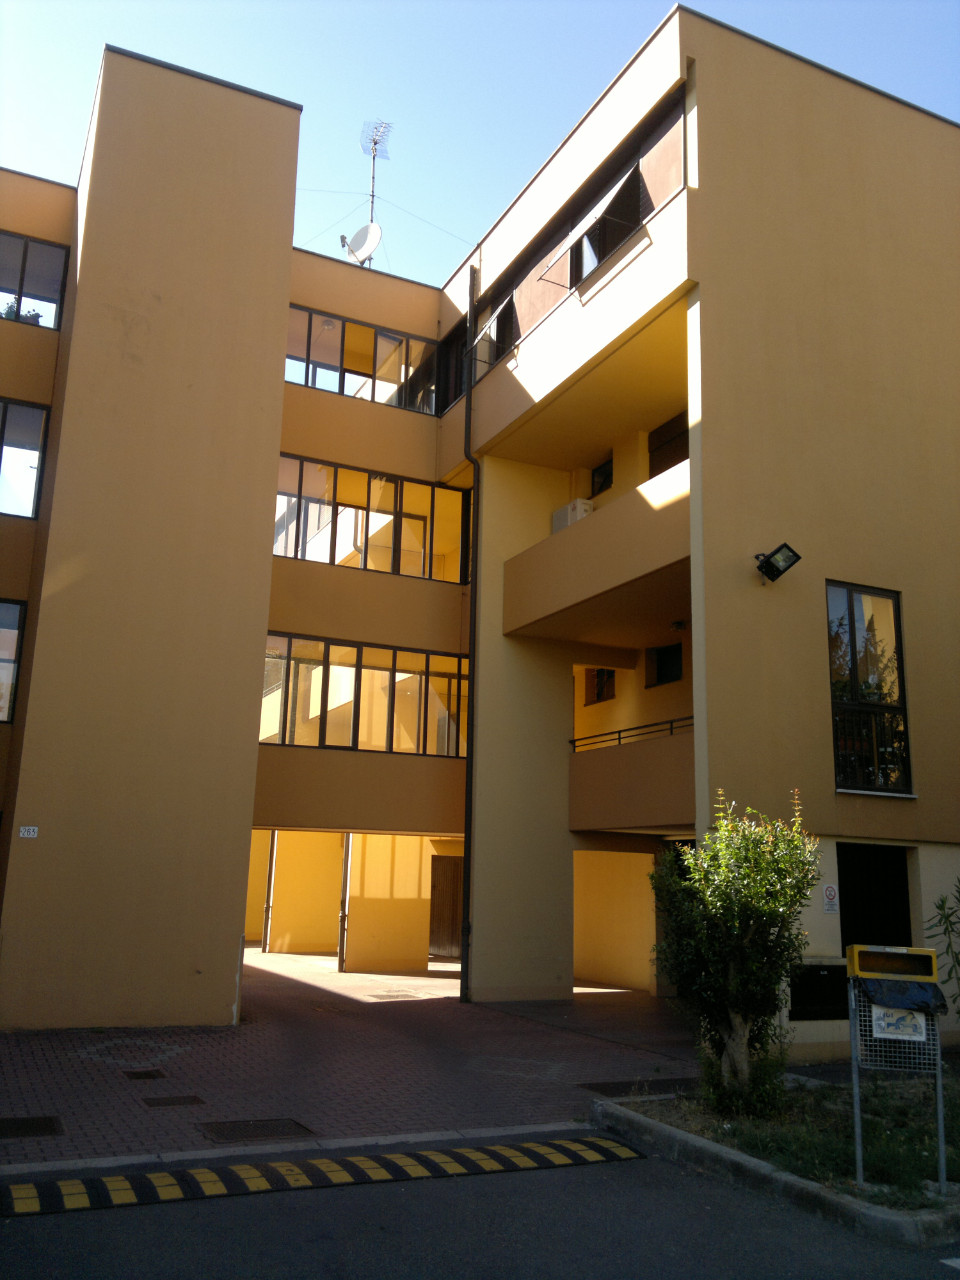 Immobili Residenziali In Vendita A Modena Pagina 8